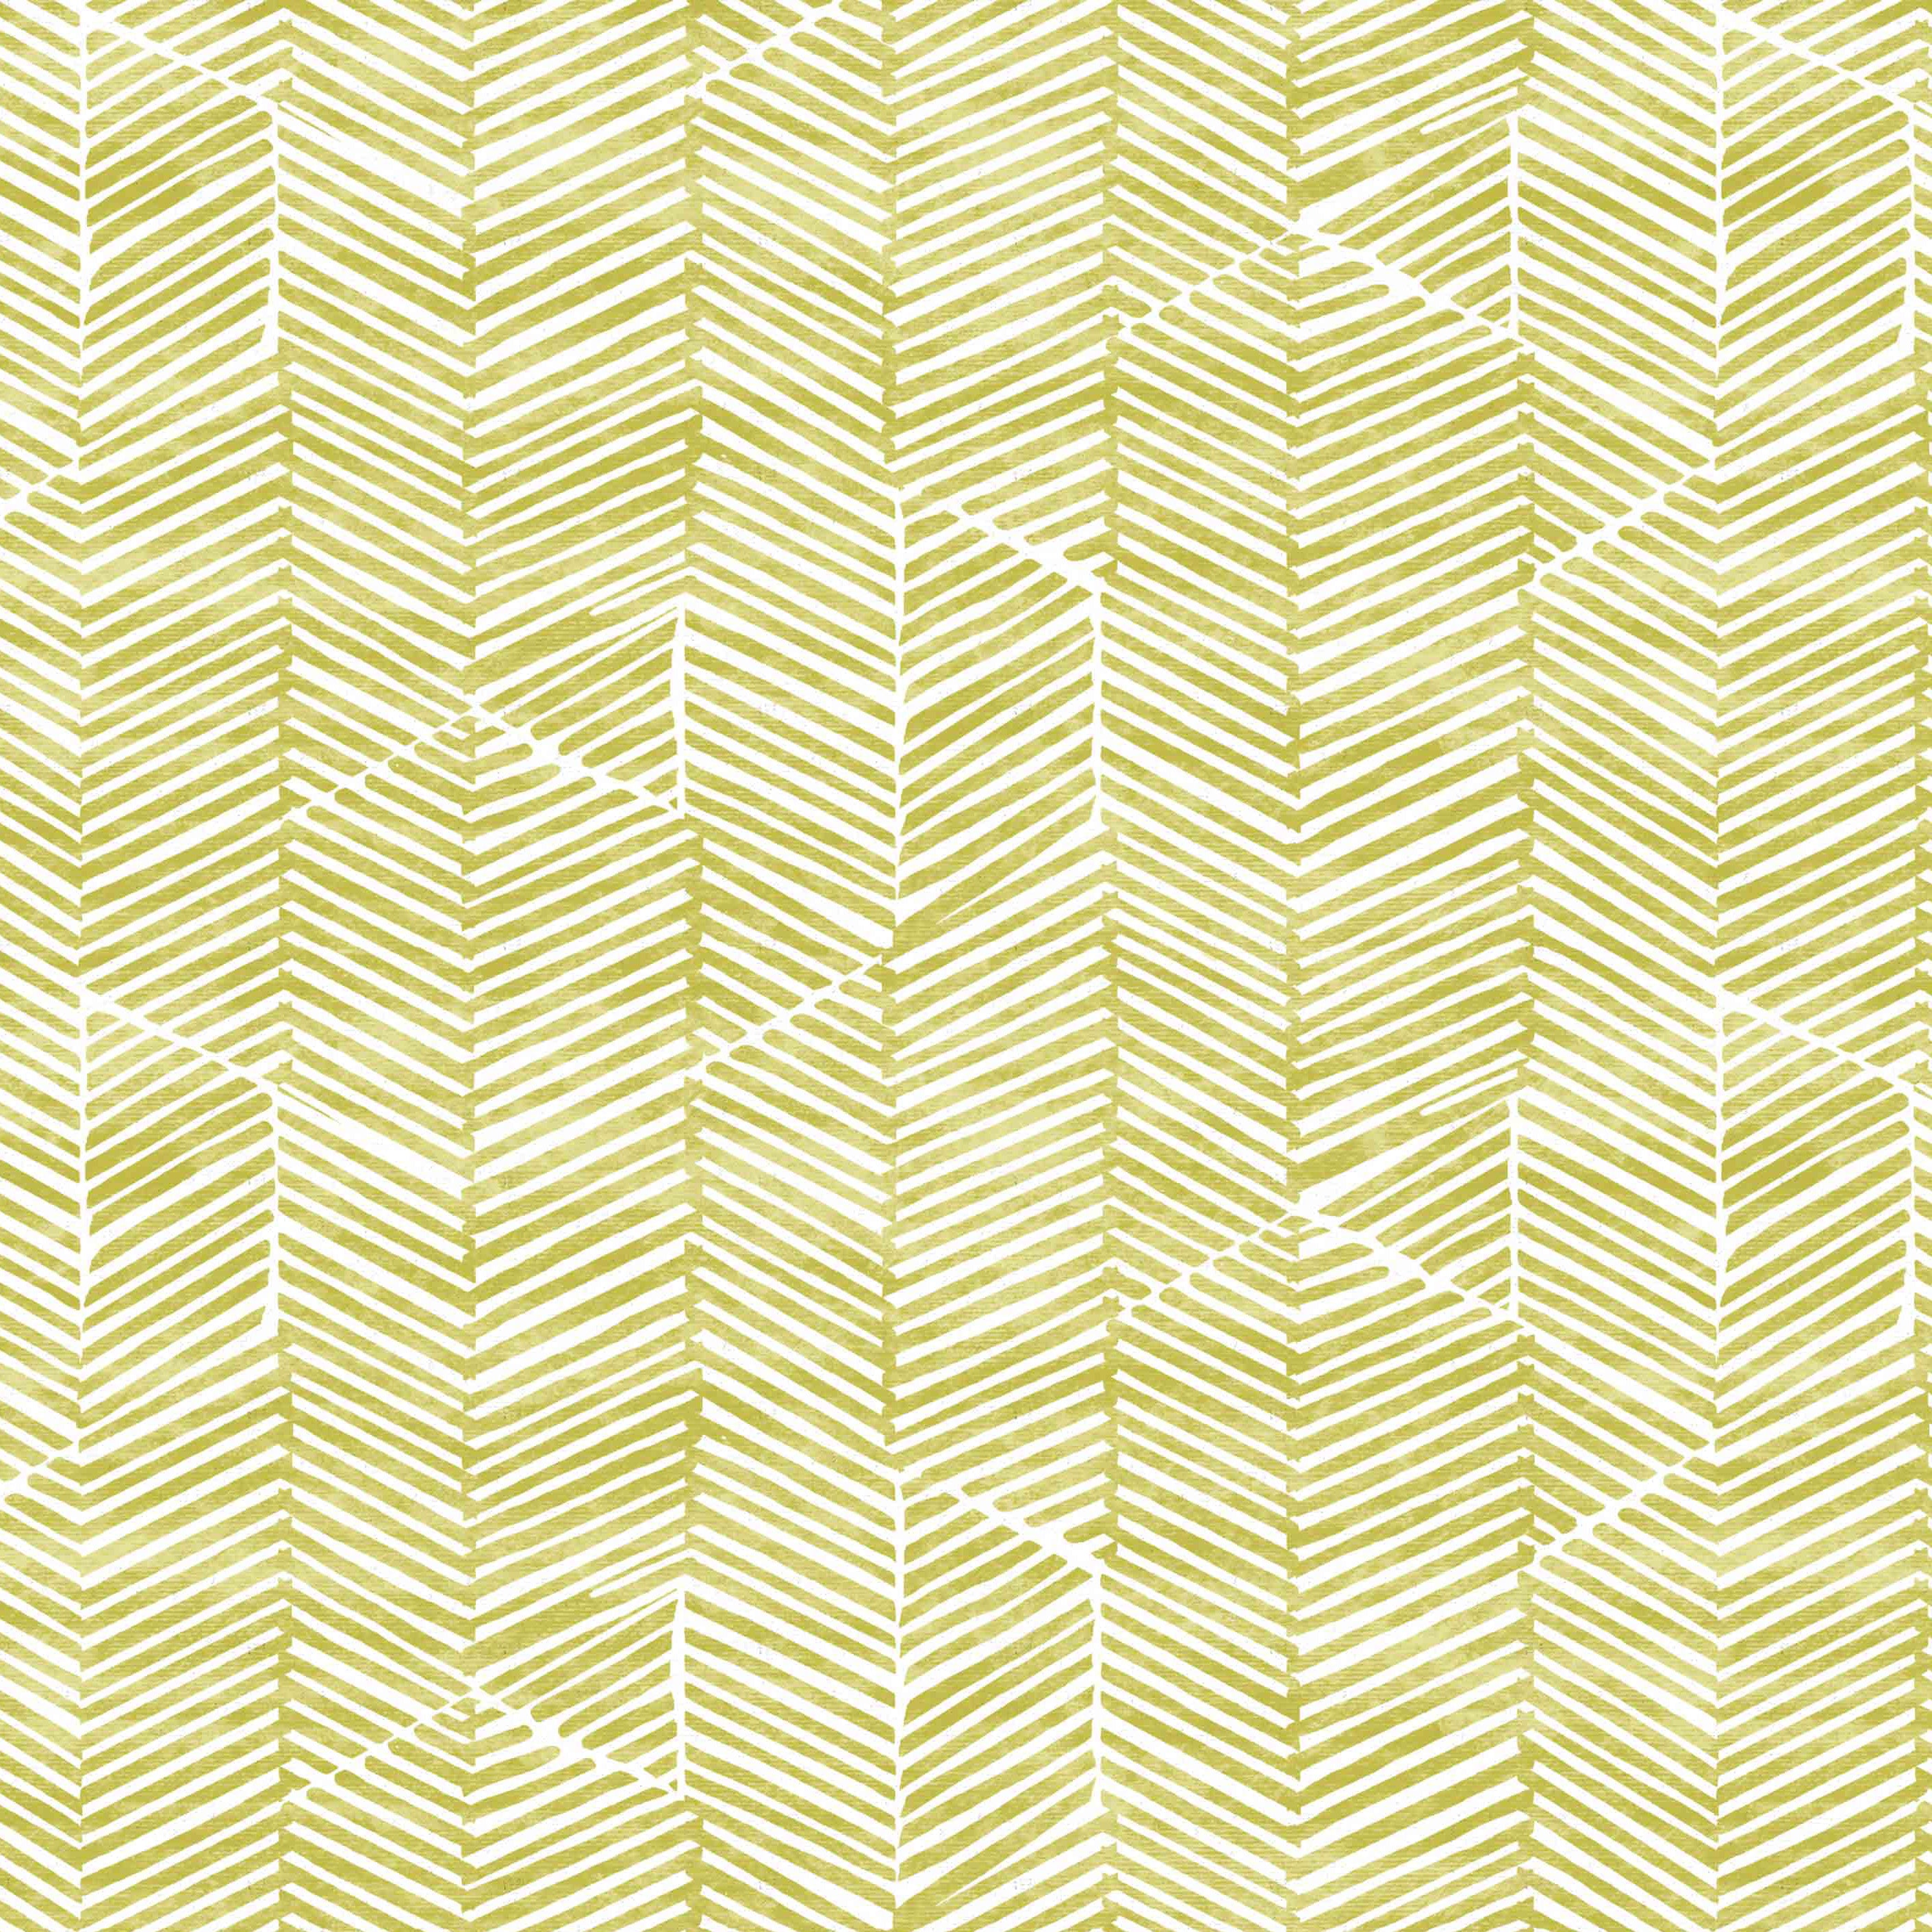 Detail of fabric in a dense herringbone print in mustard on a white field.